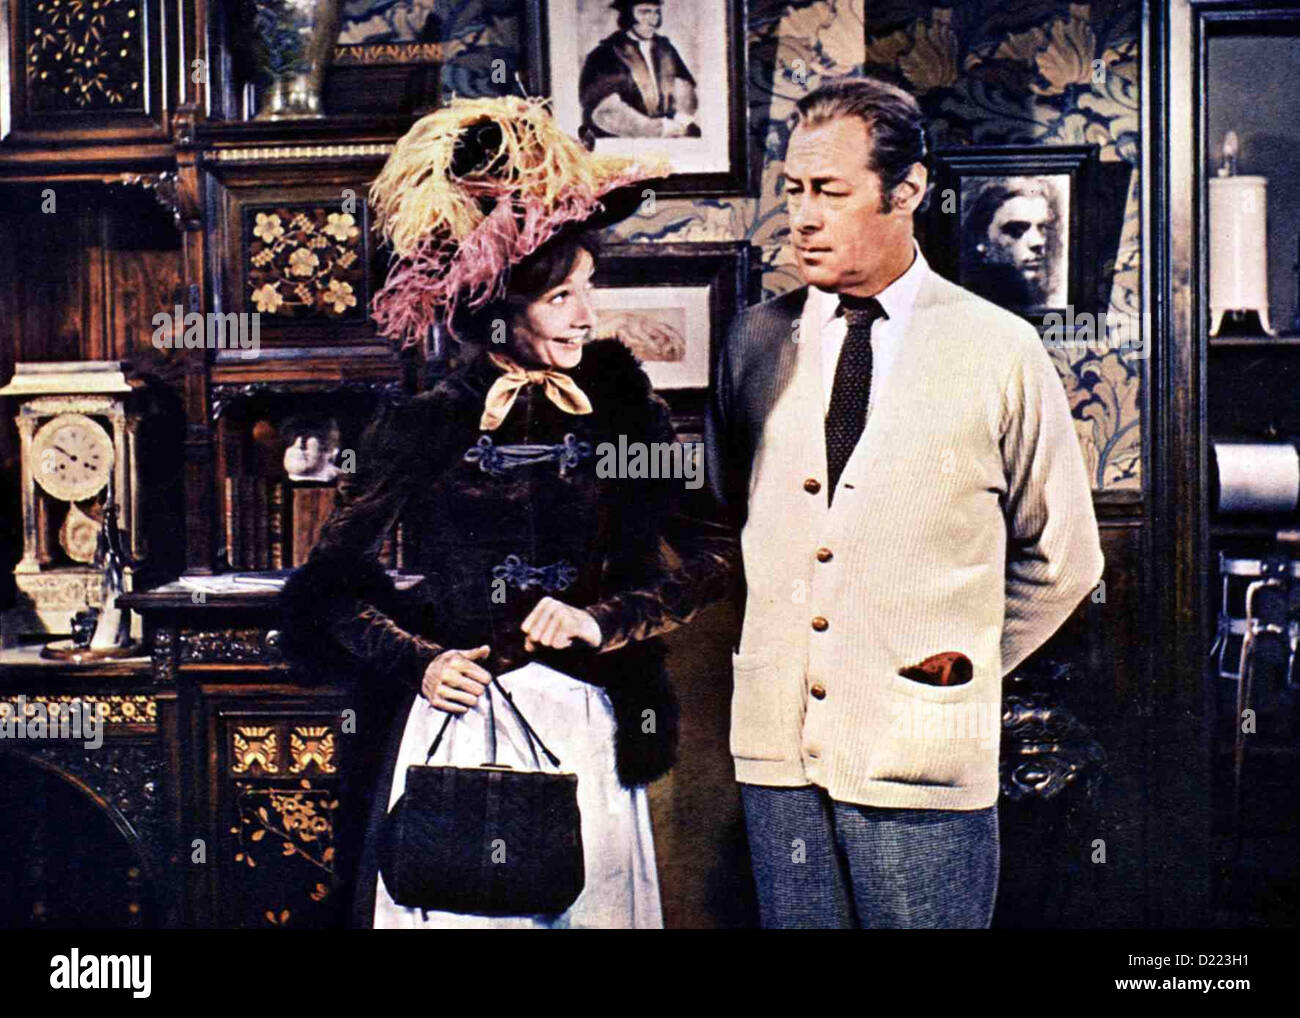 My Fair Lady   My Fair Lady   Eliza Doolittle (Audrey Hepburn), Prof. Higgins (Rex Harrison) *** Local Caption *** 1964  -- Stock Photo